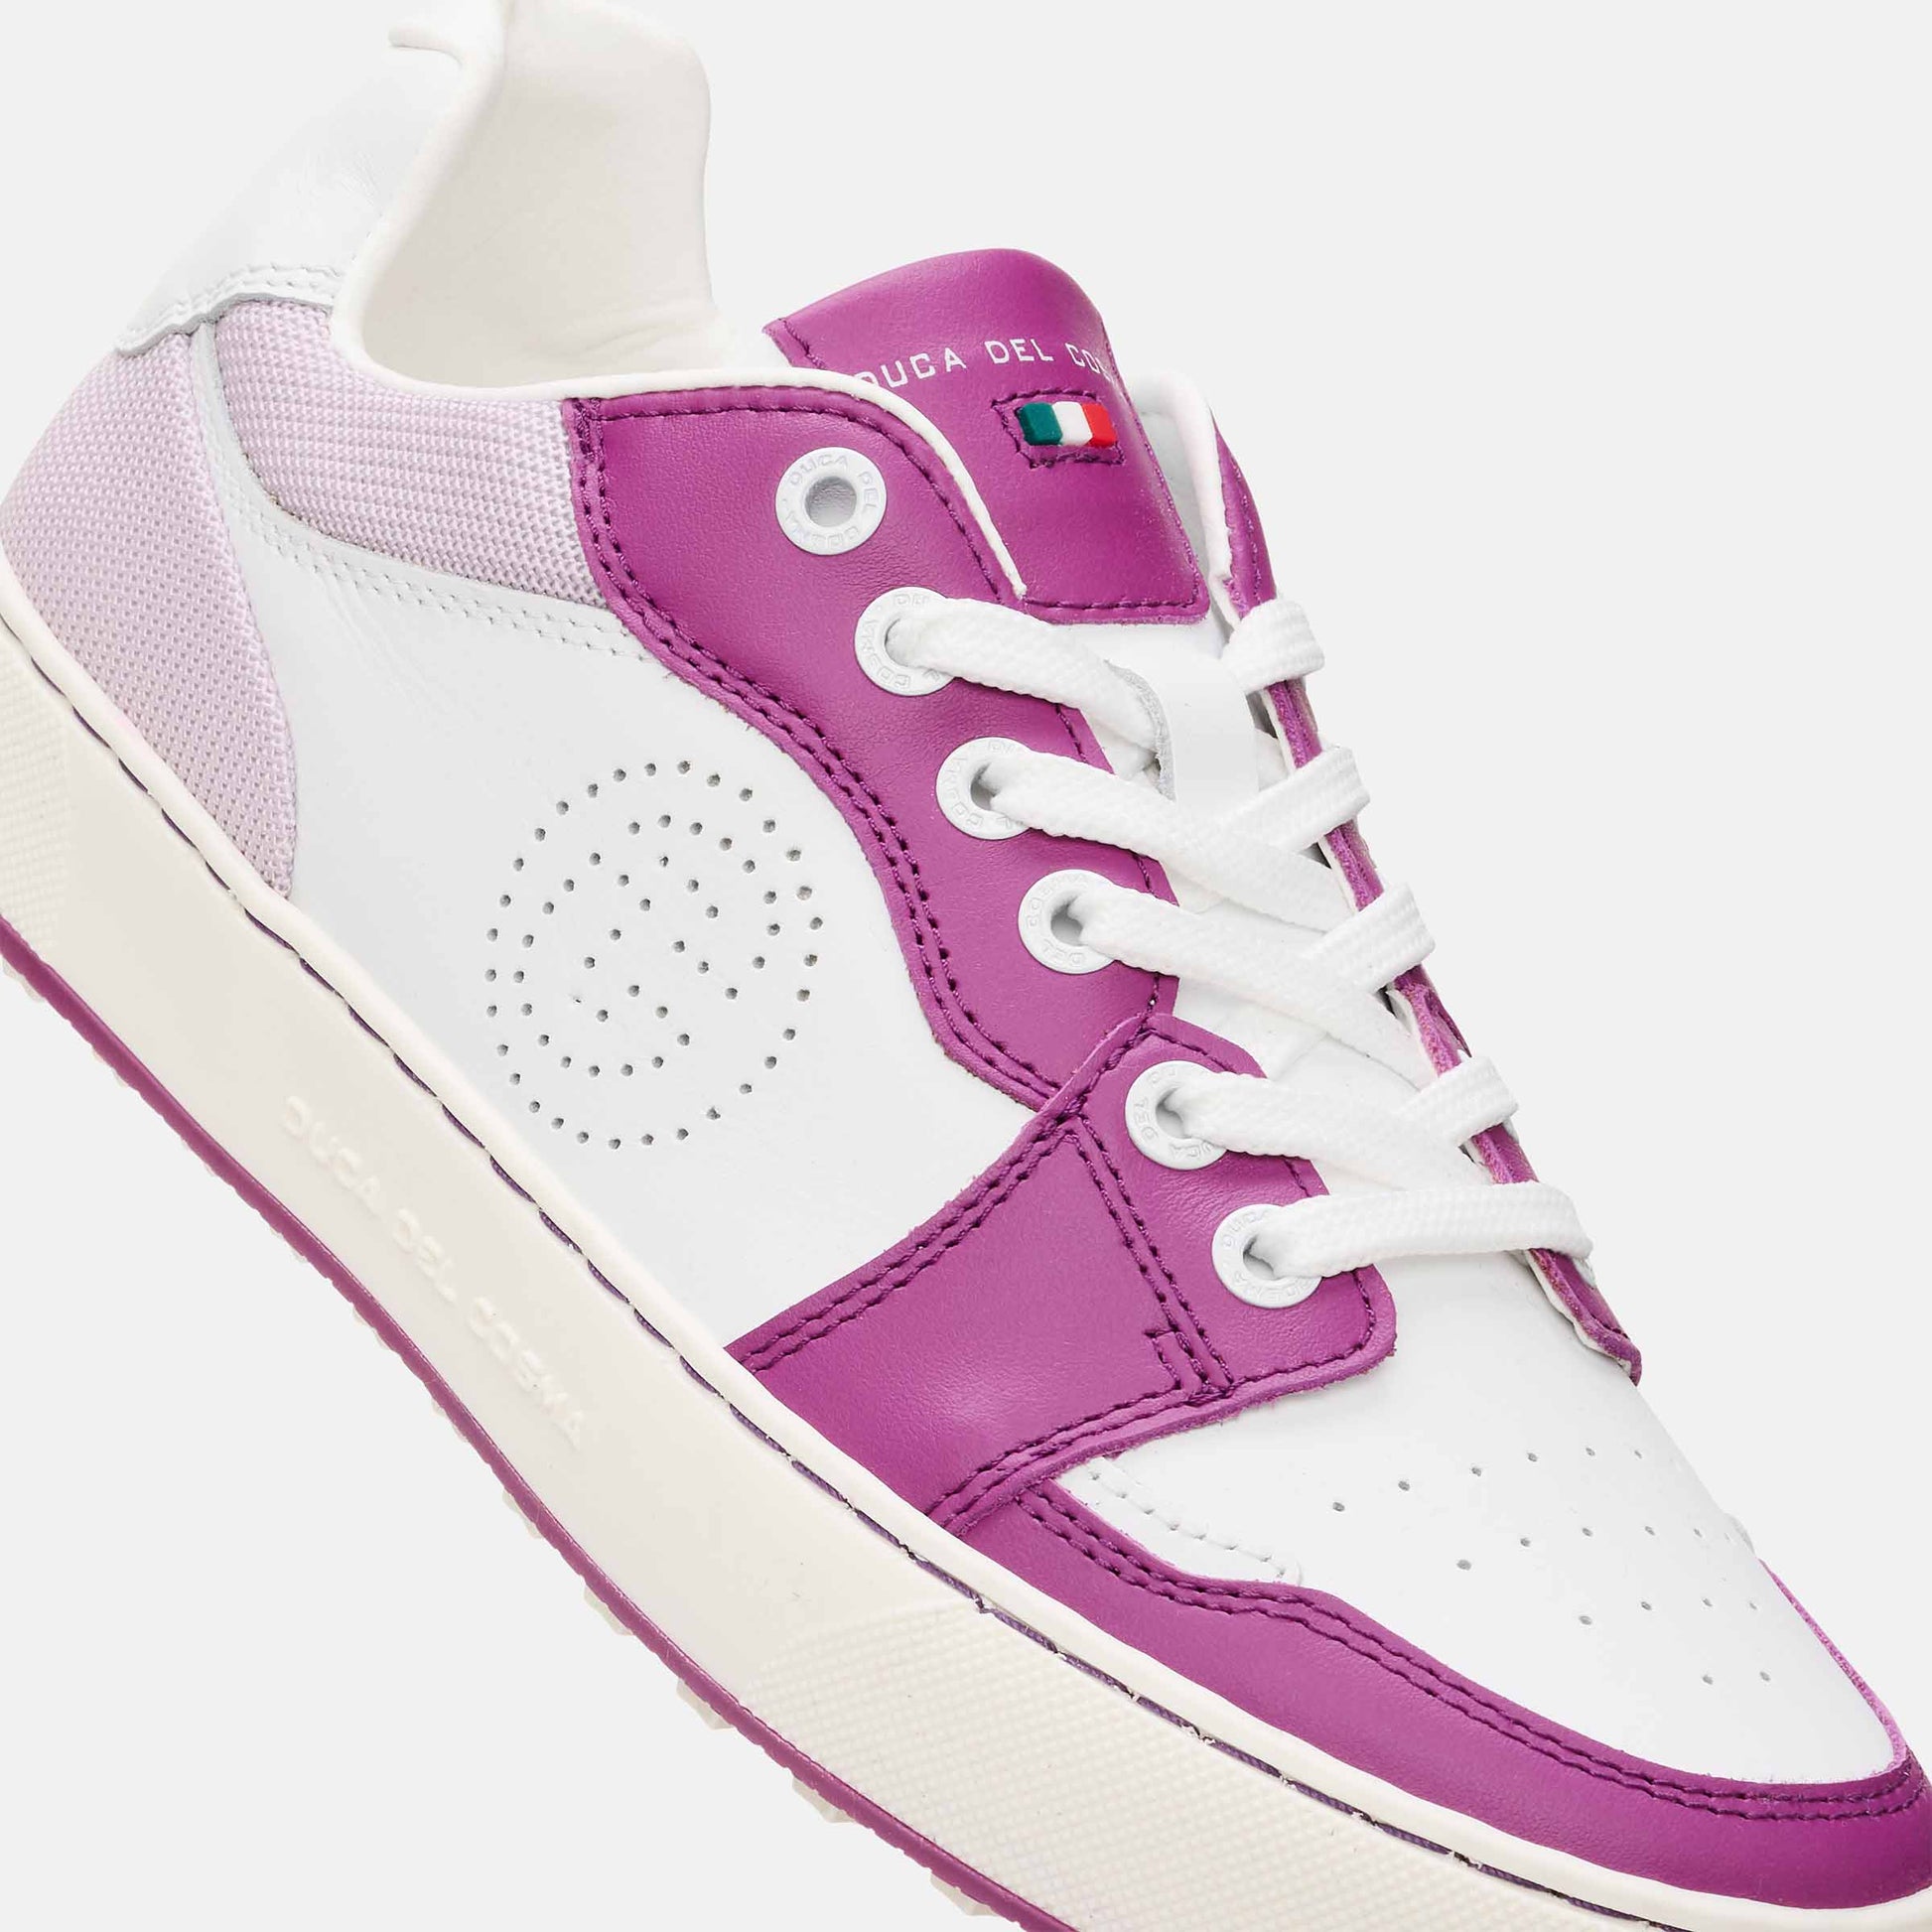 Purple Golf Shoes, Women's Pink Golf Shoes, Women's Golf Shoes Duca del Cosma, Spikeless Golf Shoes.